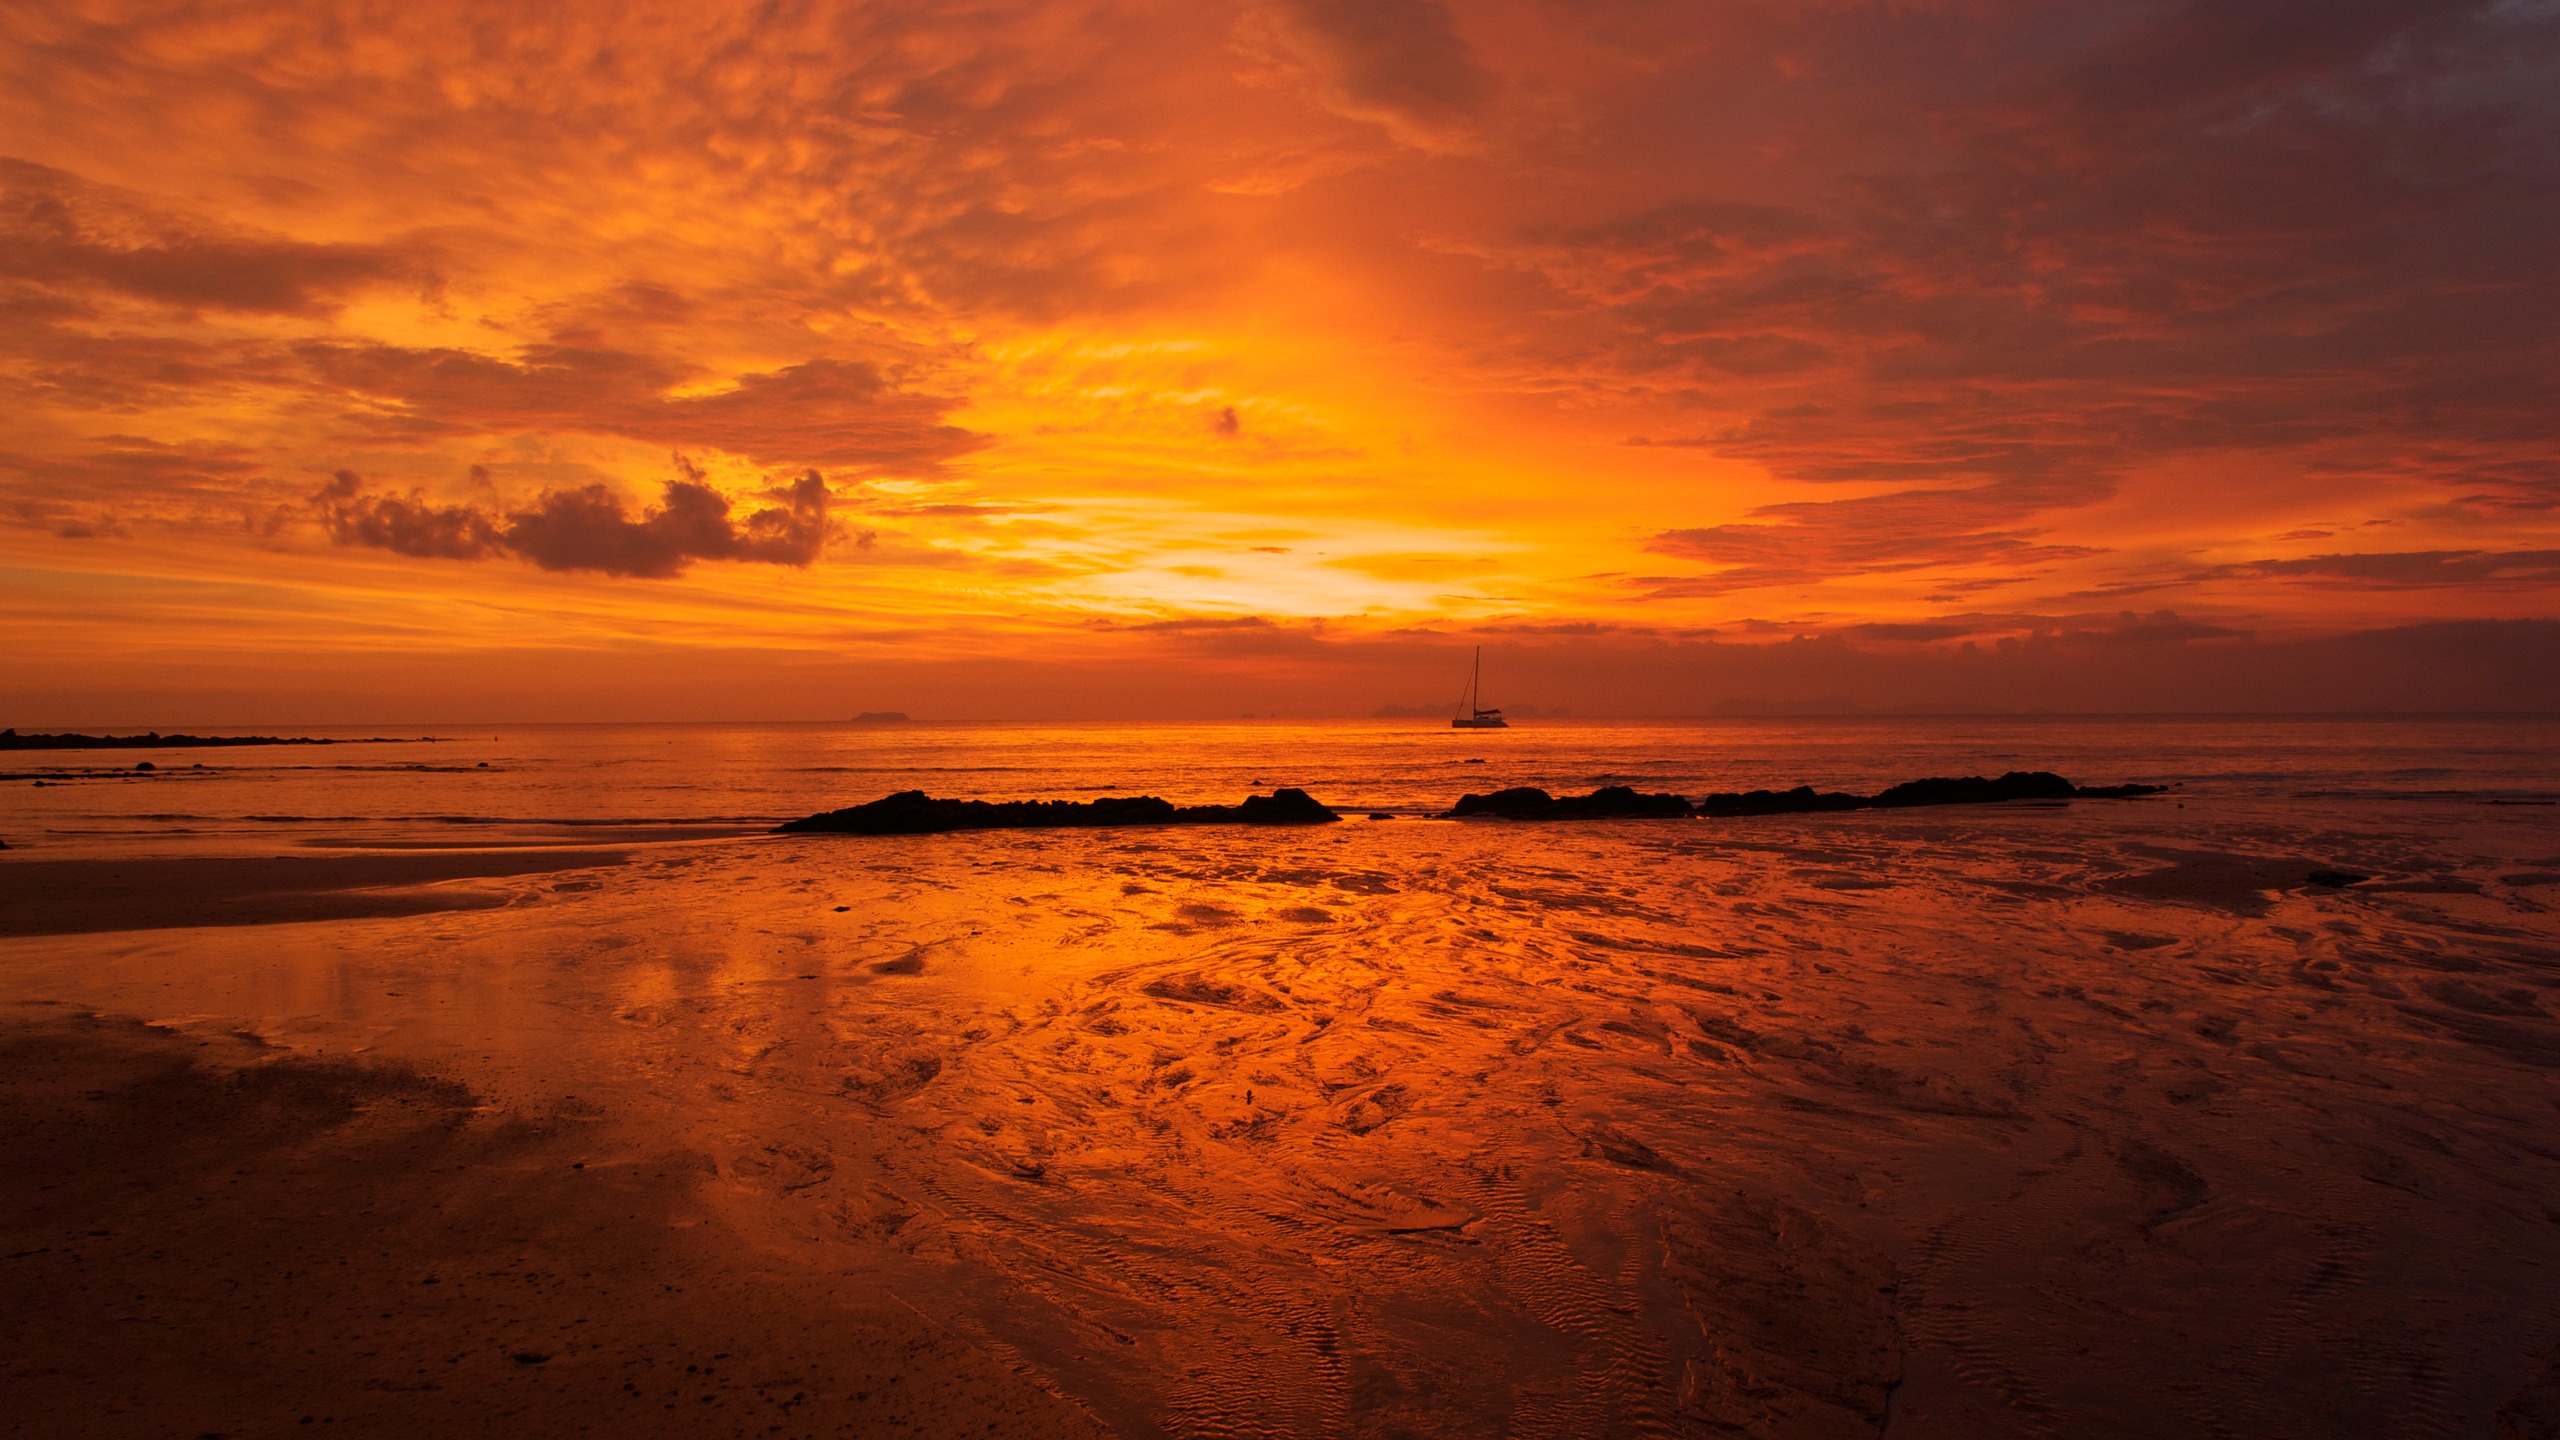 Andaman Sunset for 2560x1440 HDTV resolution